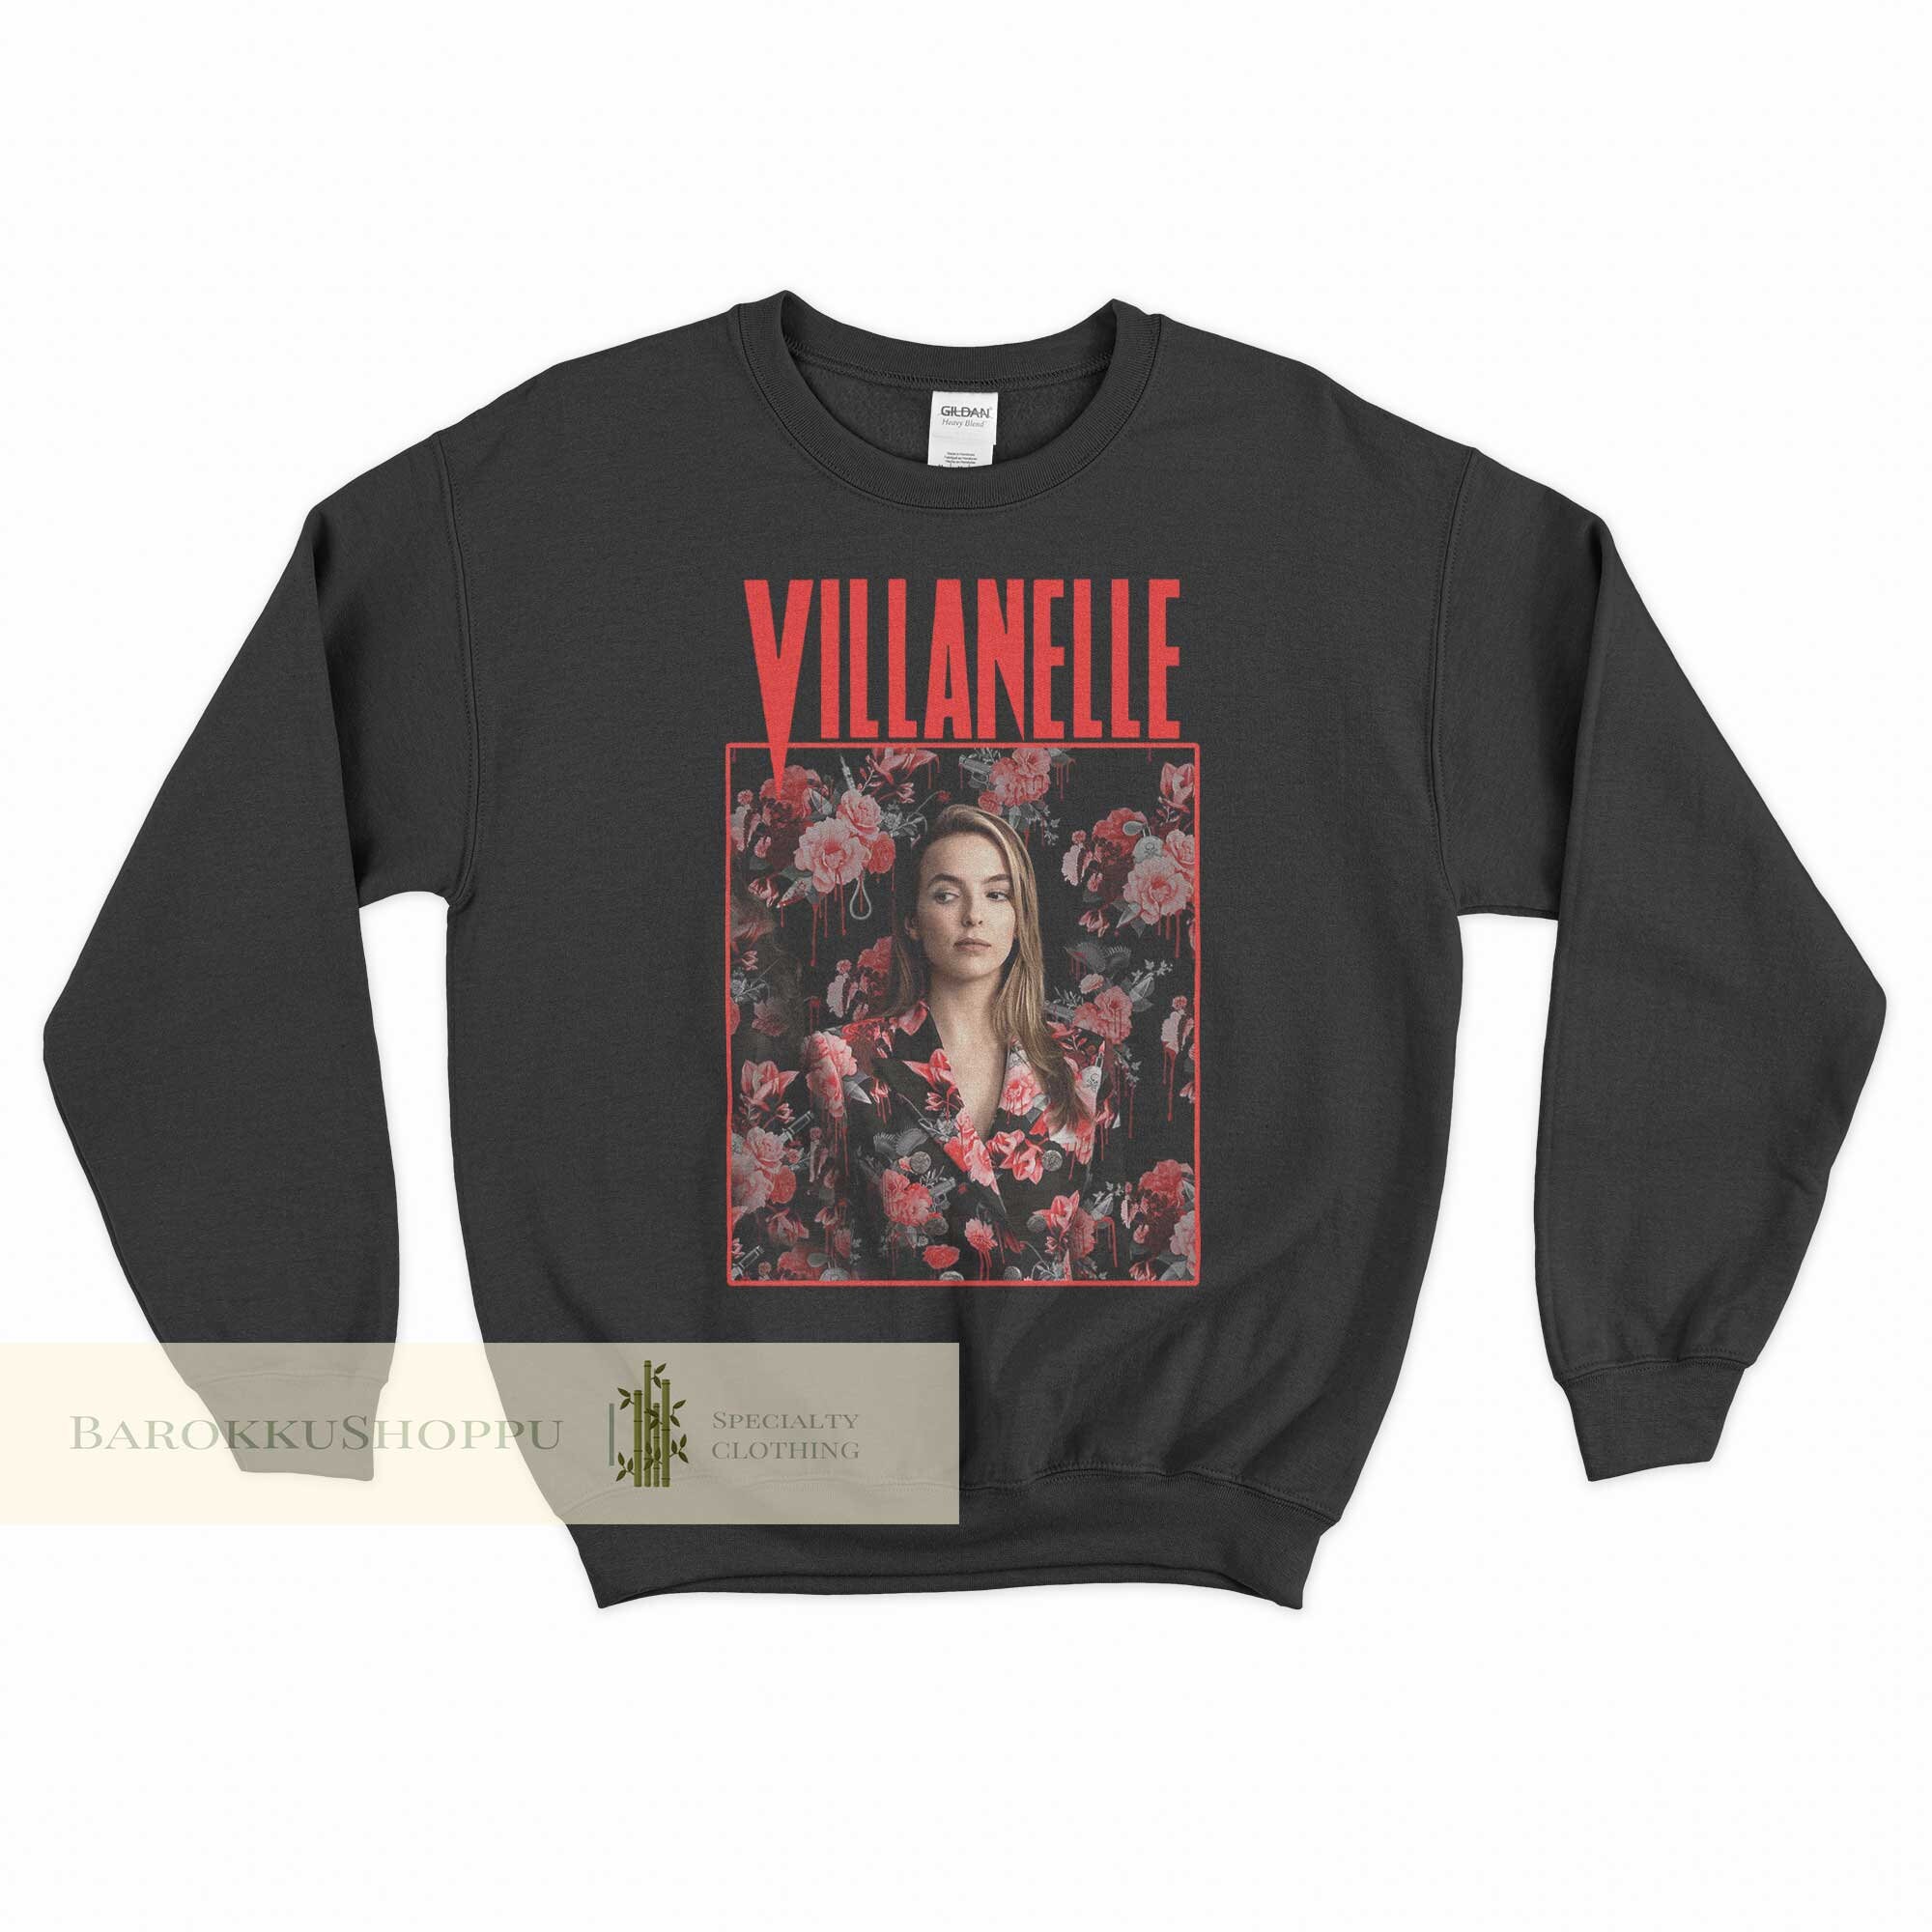 Villanelle Sweatshirt Villanelle shirt Villanelle Poster Floral Eve Sweatshirt Killing Eve Sweater Killing Eve shirt Unisex Sweatshirt Tee